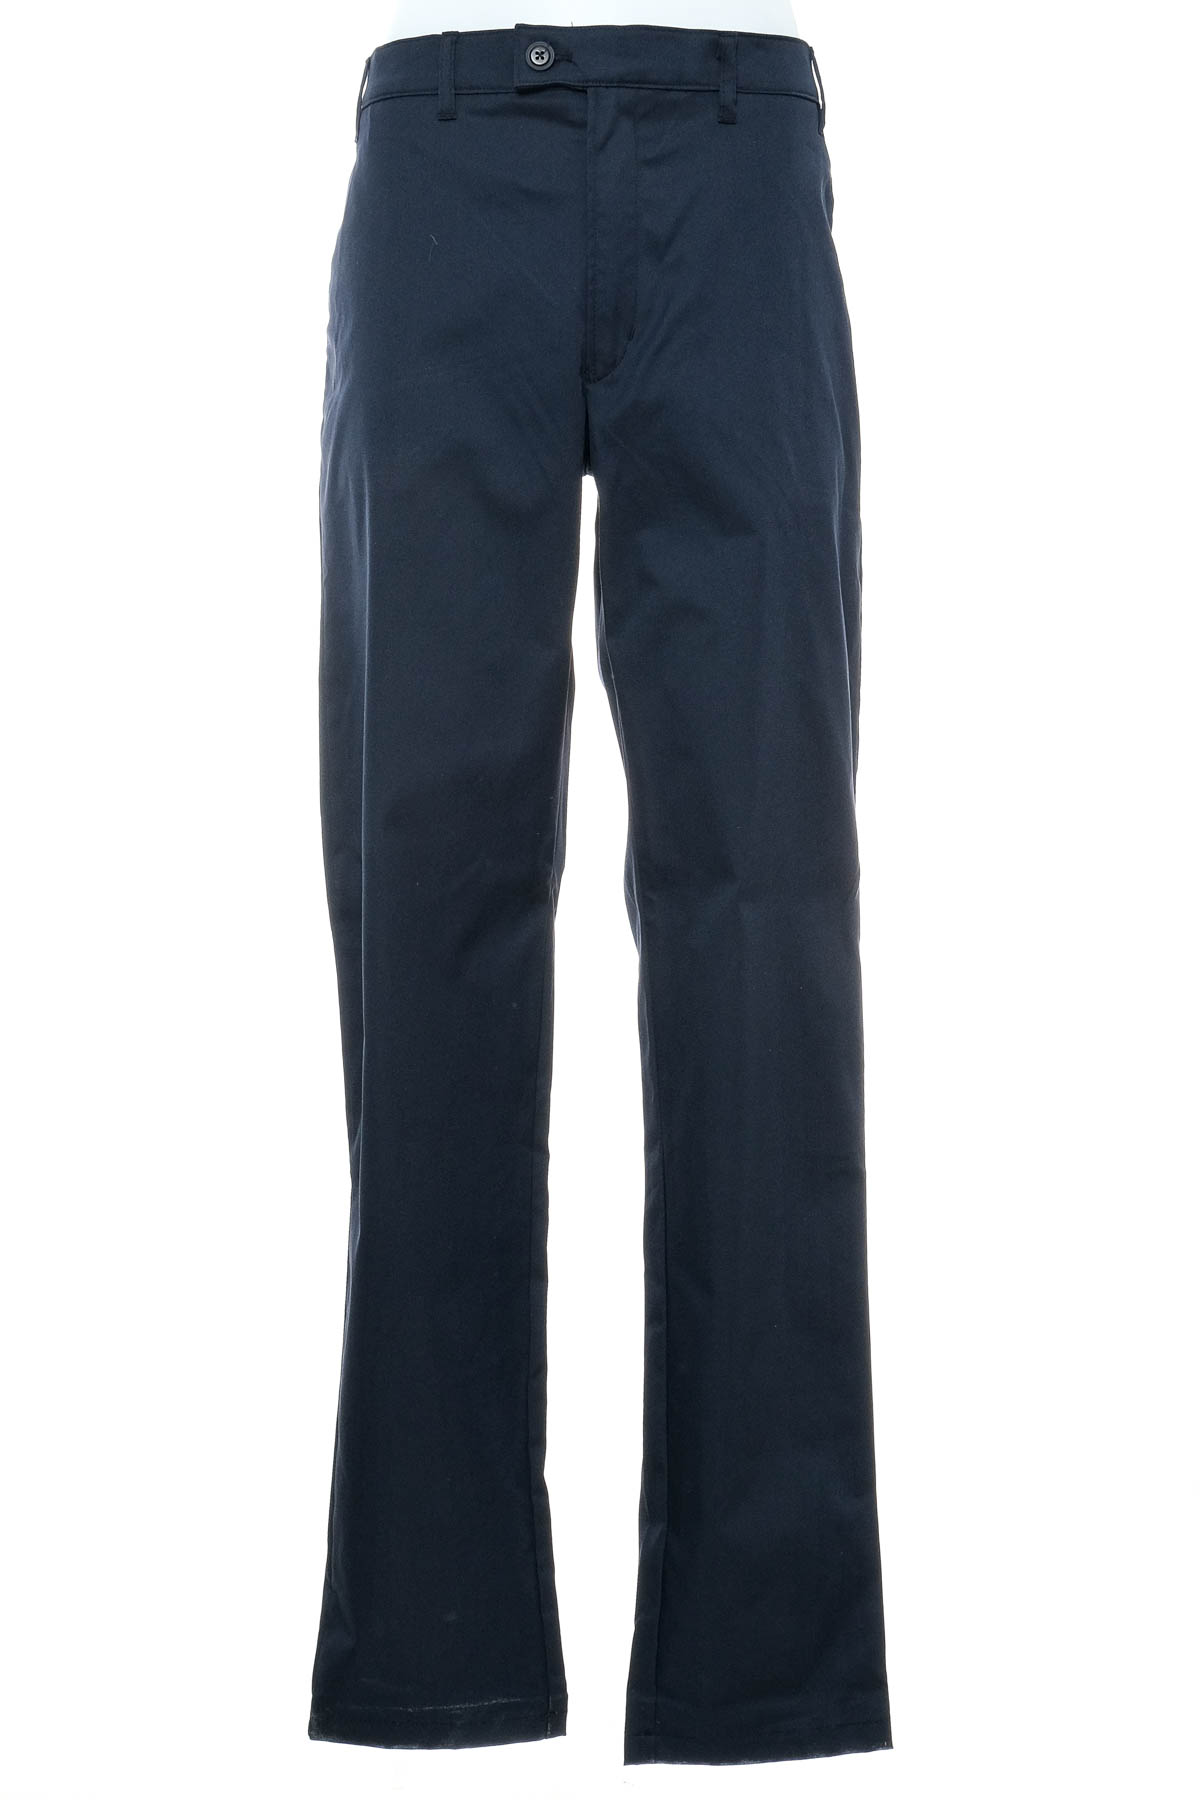 Pantalon pentru bărbați - GREIFF - 0